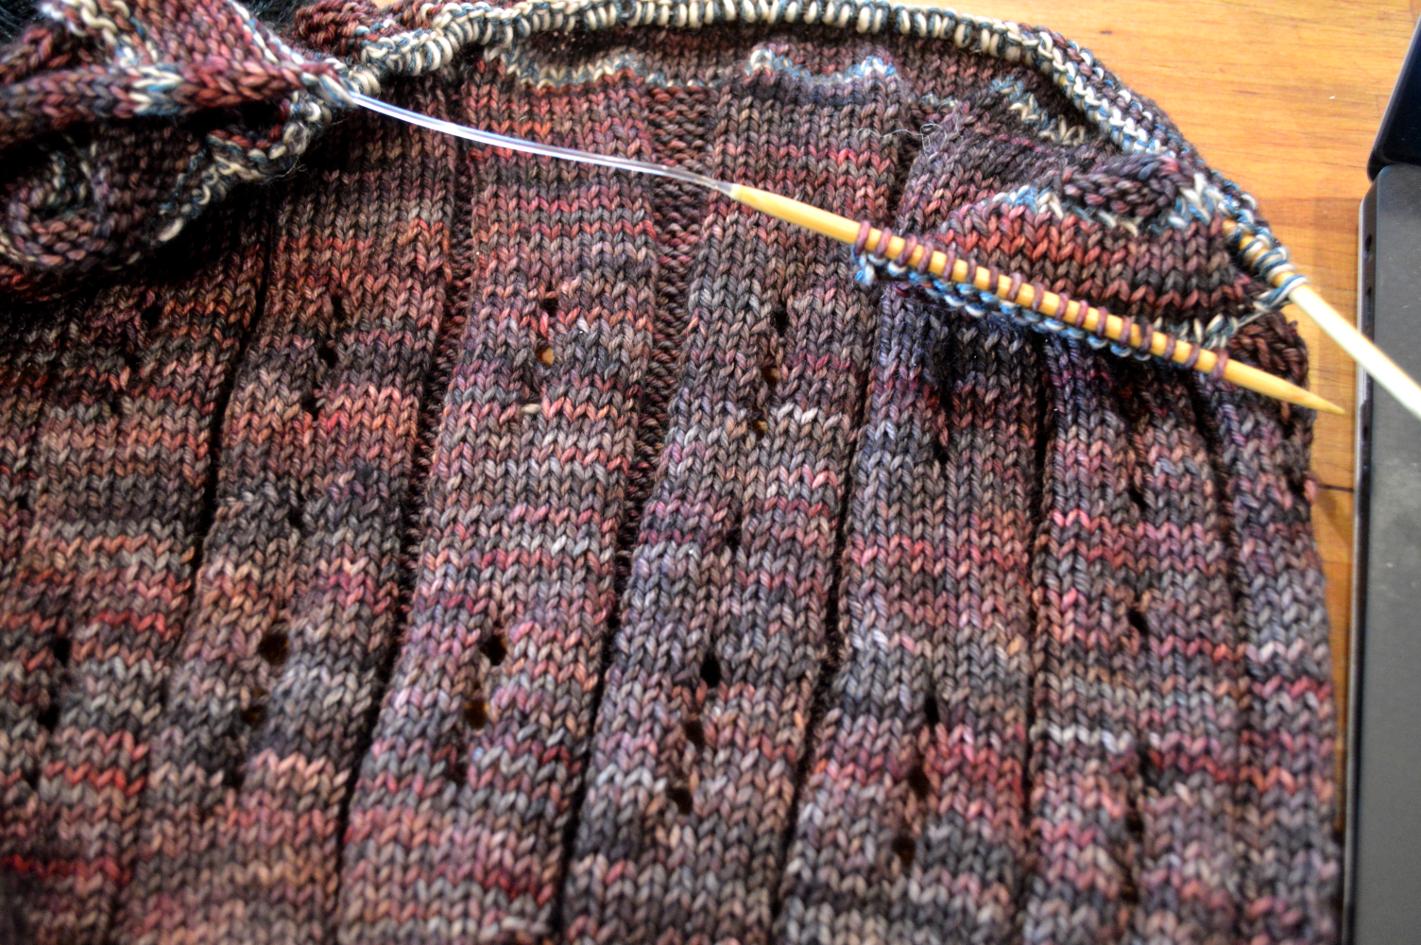 Sew Knit Ribbing - MADE EVERYDAY